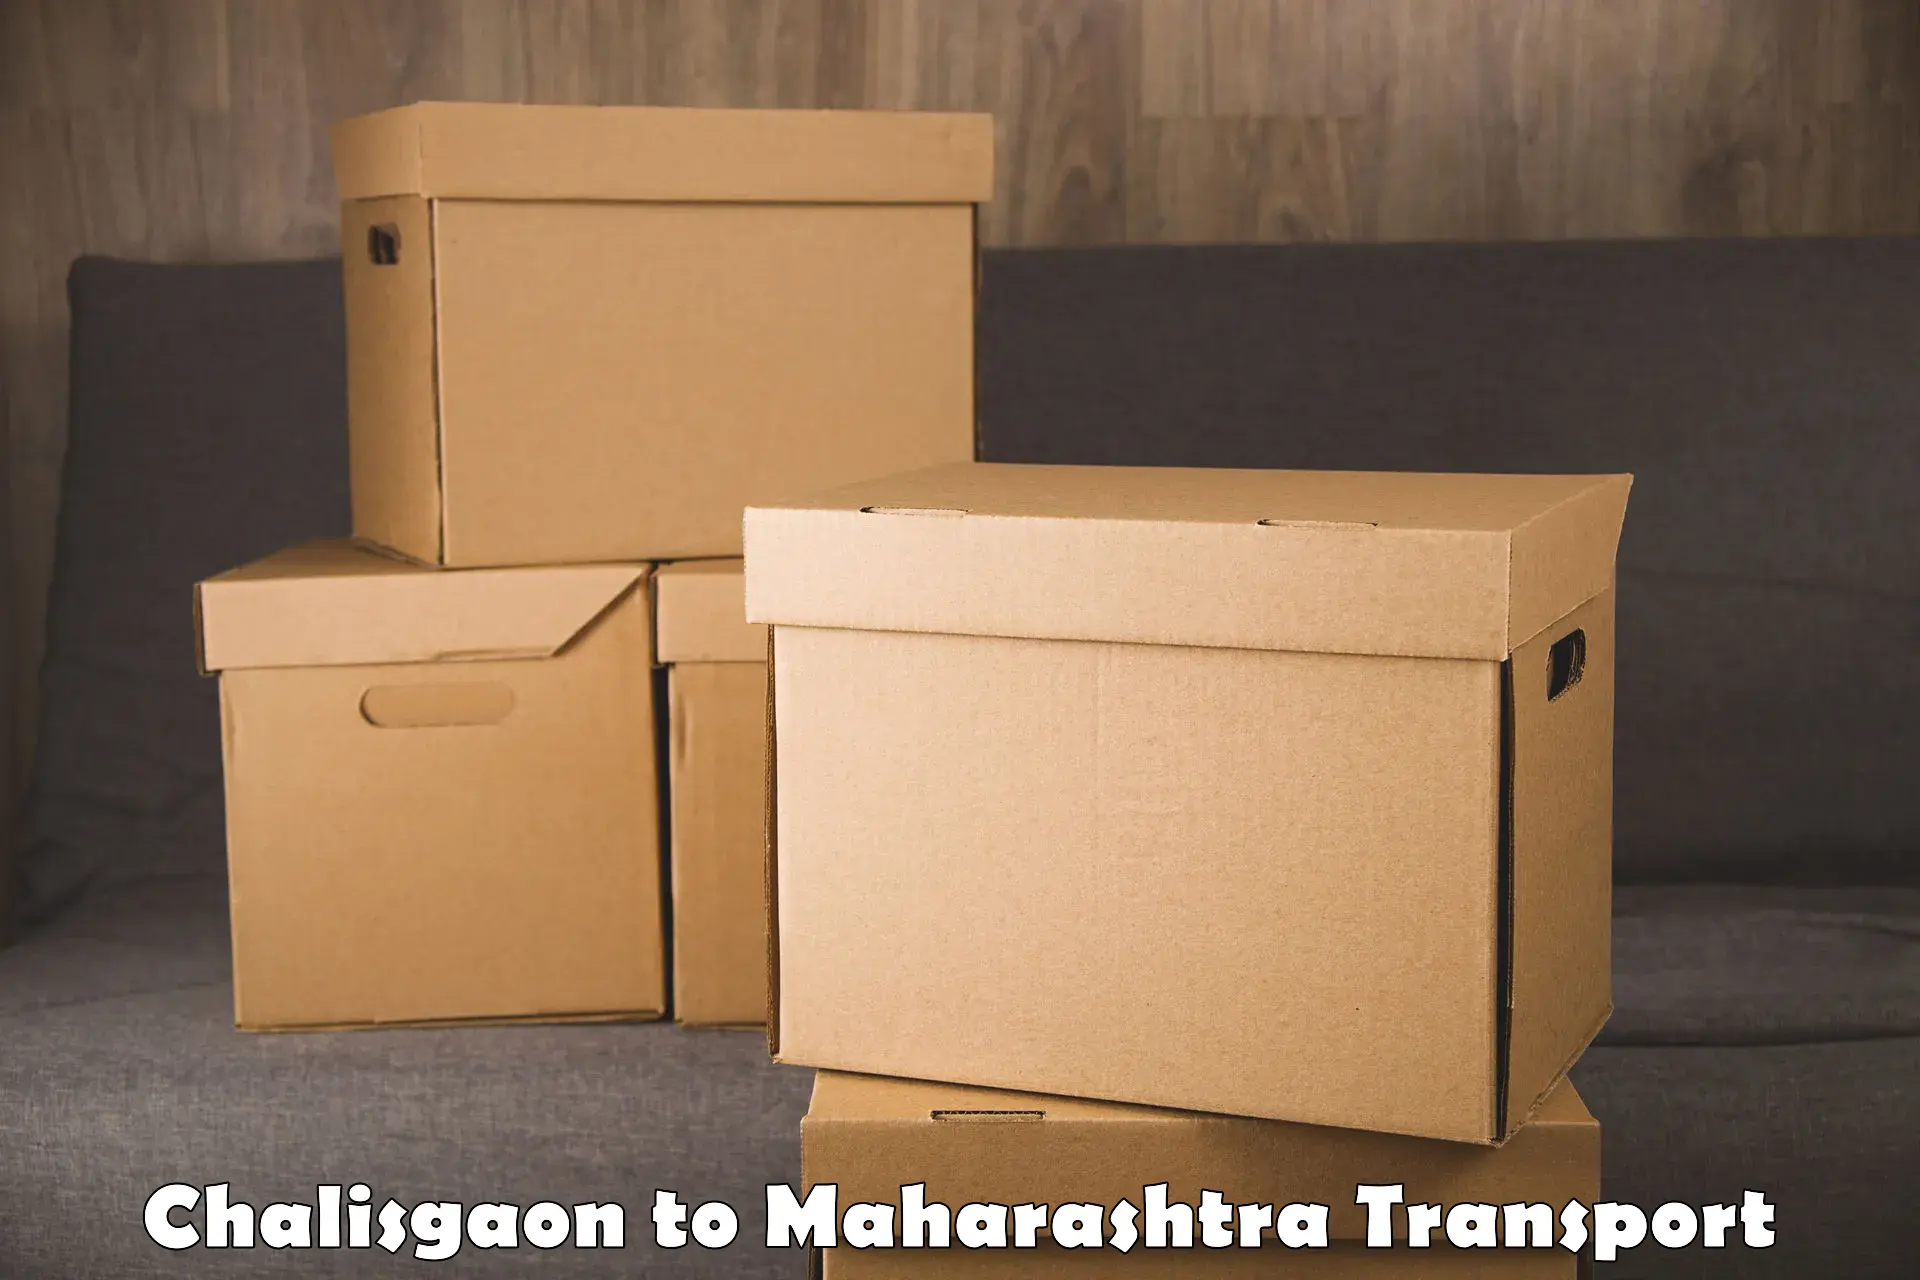 Truck transport companies in India Chalisgaon to Maharashtra